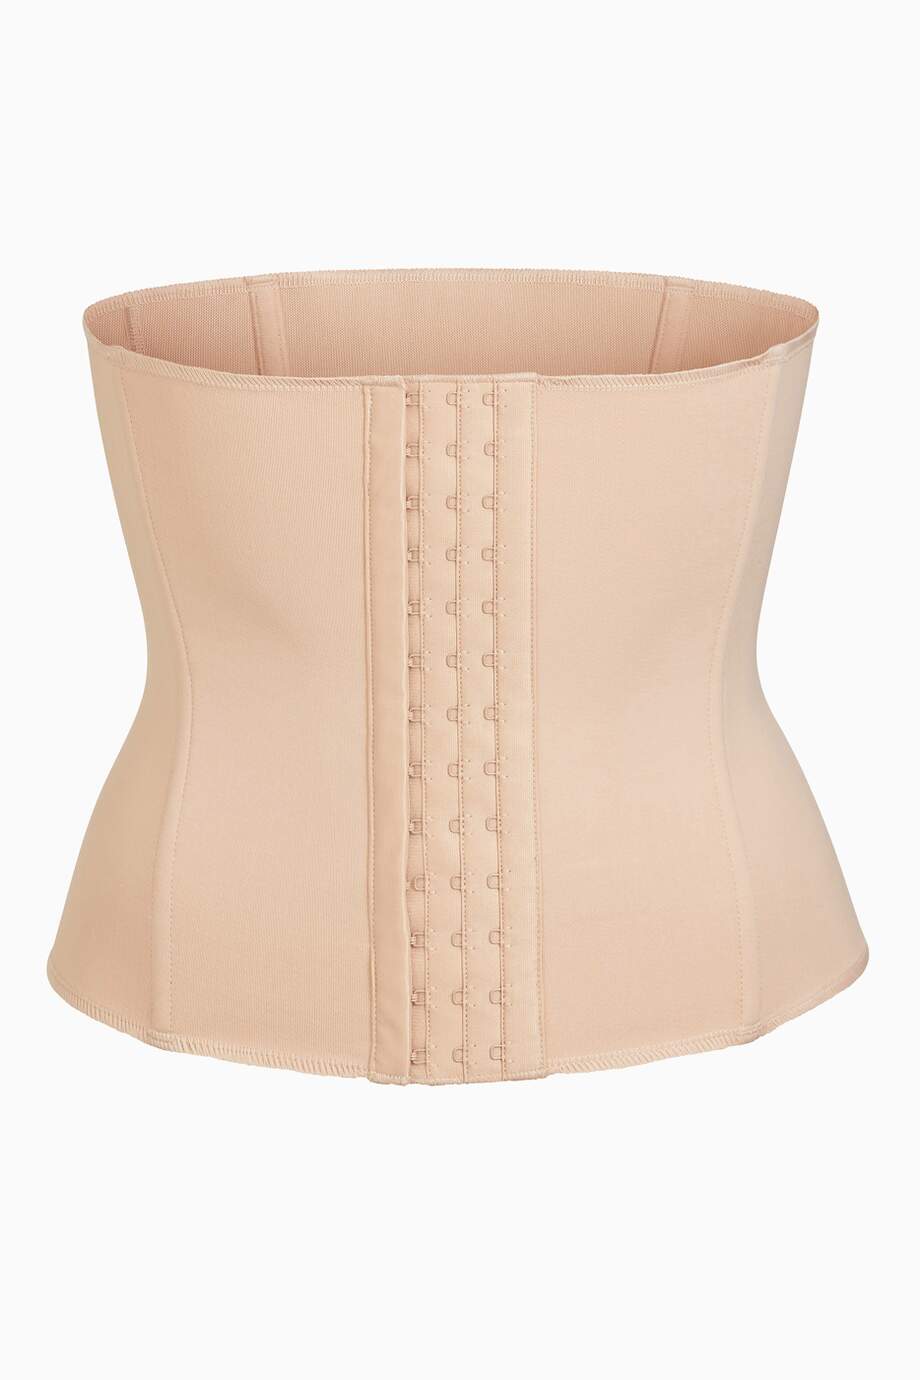 HOMEST Shape Wear for Women Waist Trainer Belt for Women Tummy